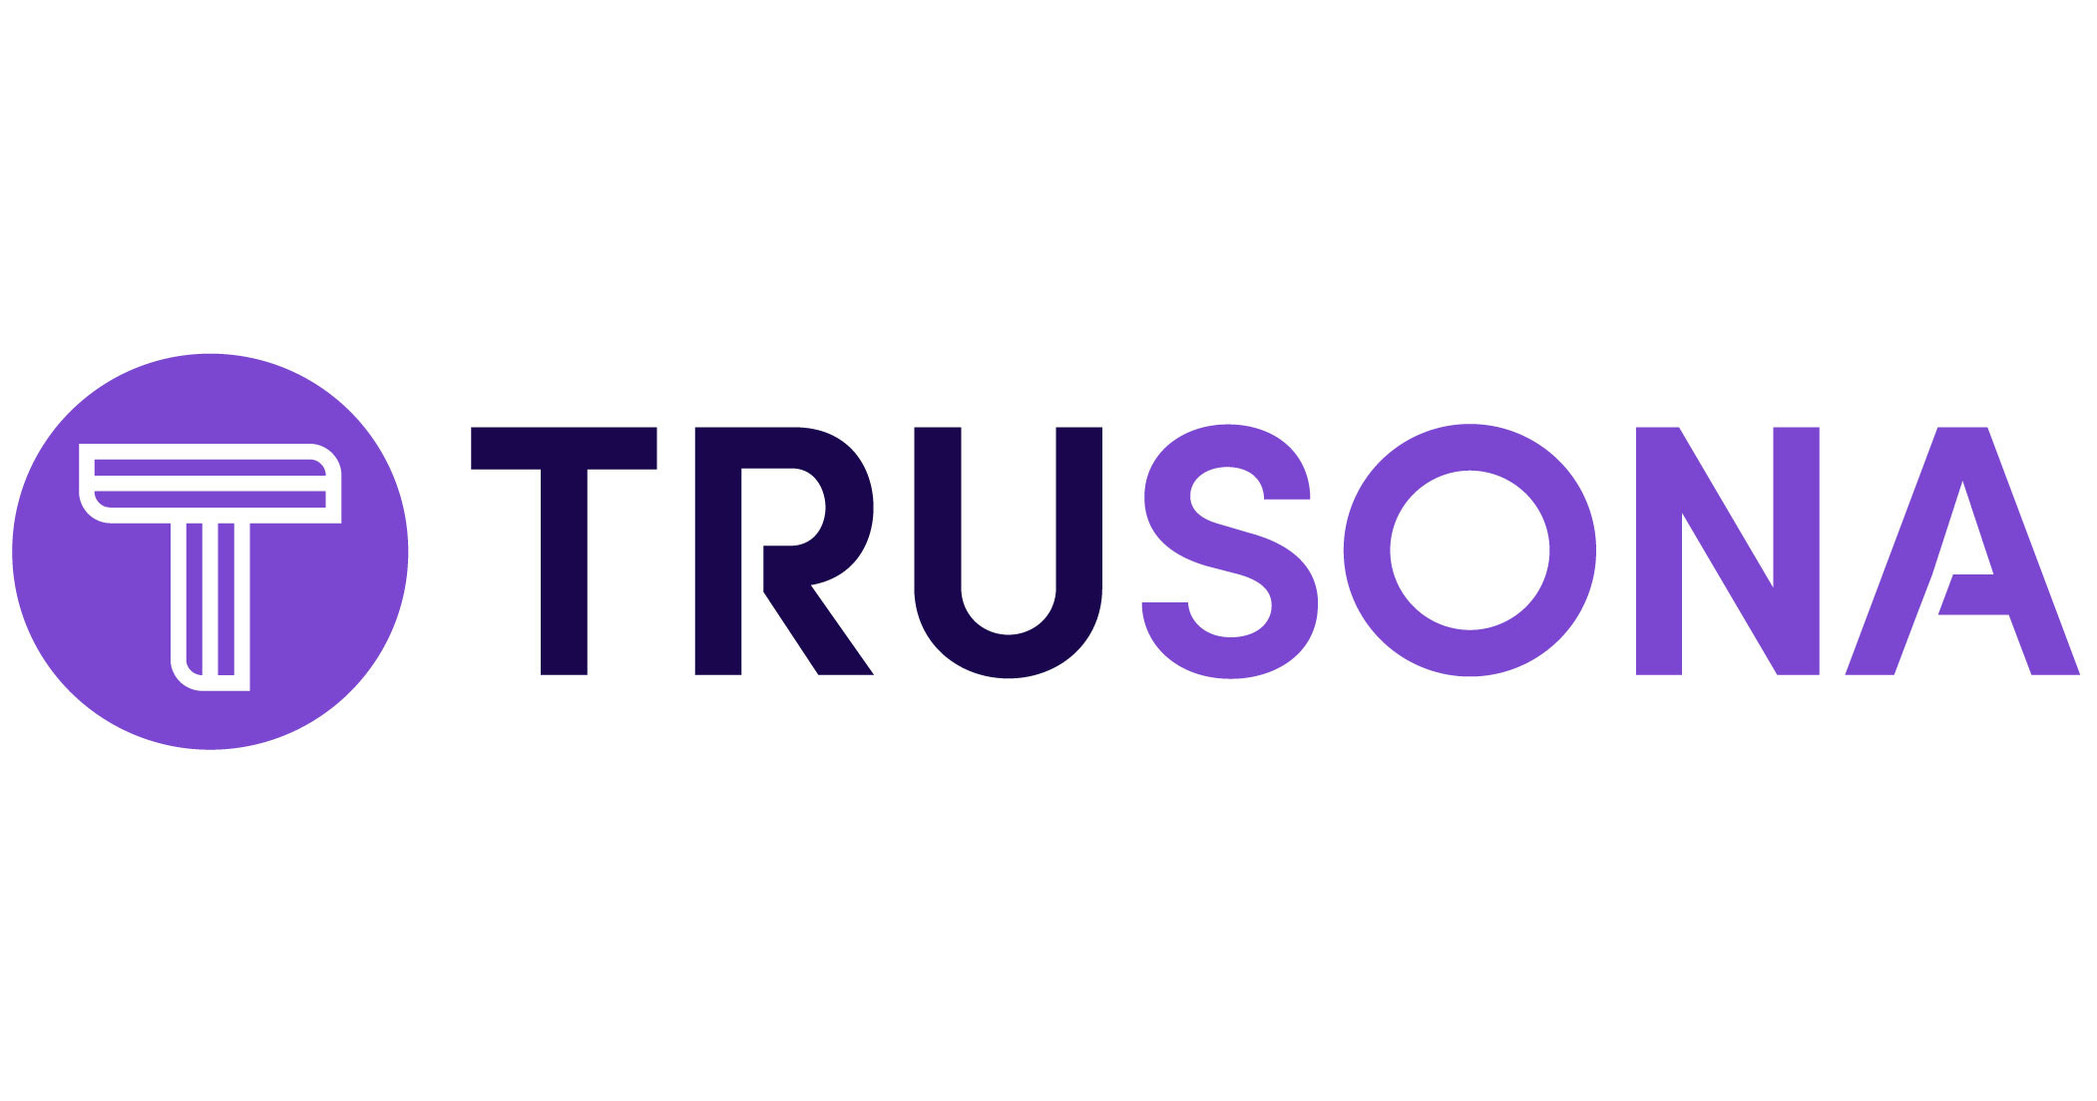 Trusona Logo jpg?p=facebook.